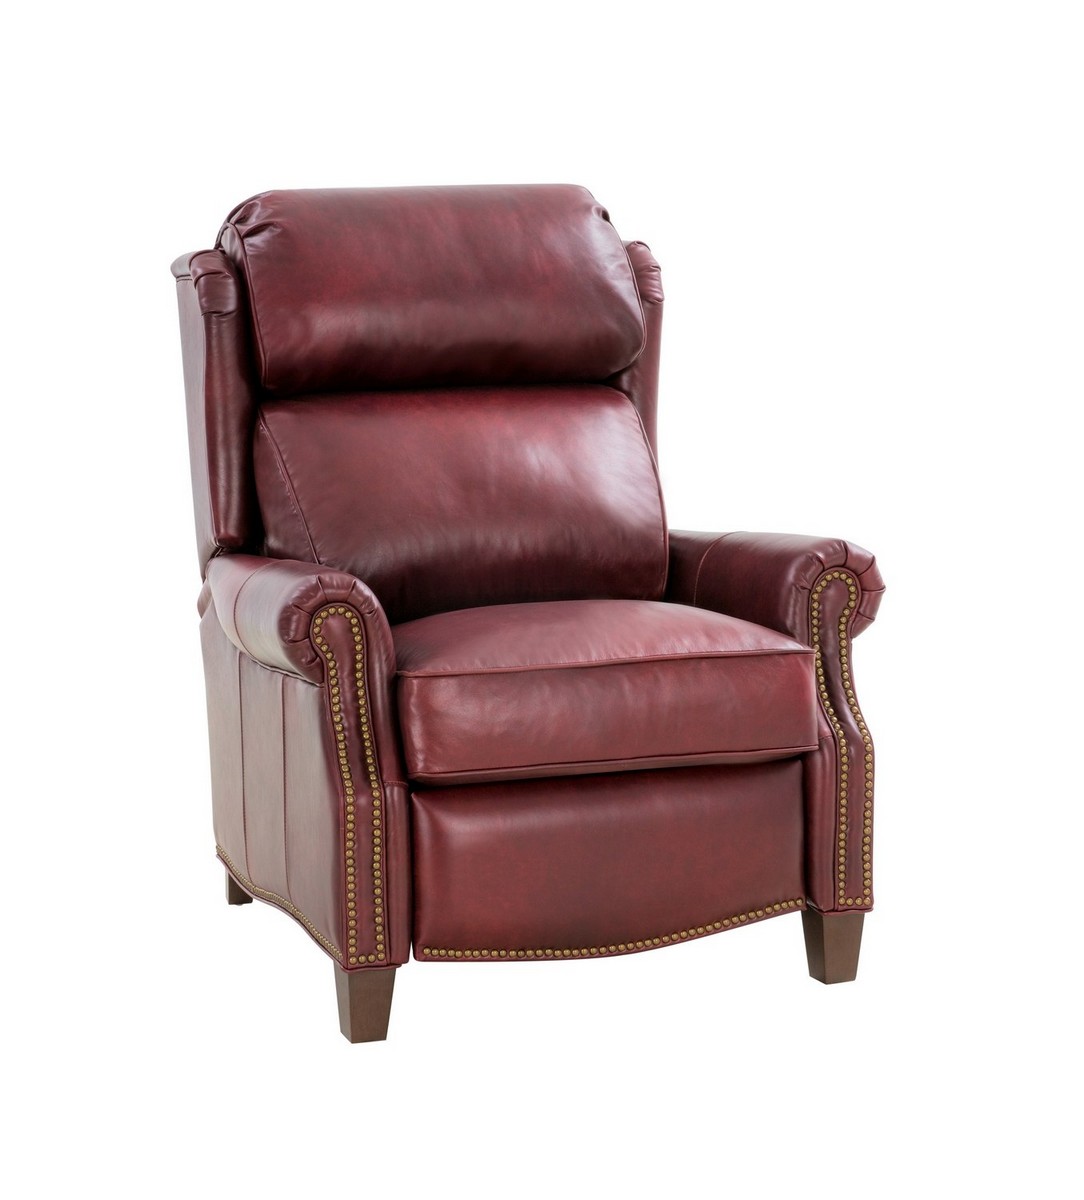 Barcalounger Meade Recliner Chair - Emerson Sangria/Top Grain Leather